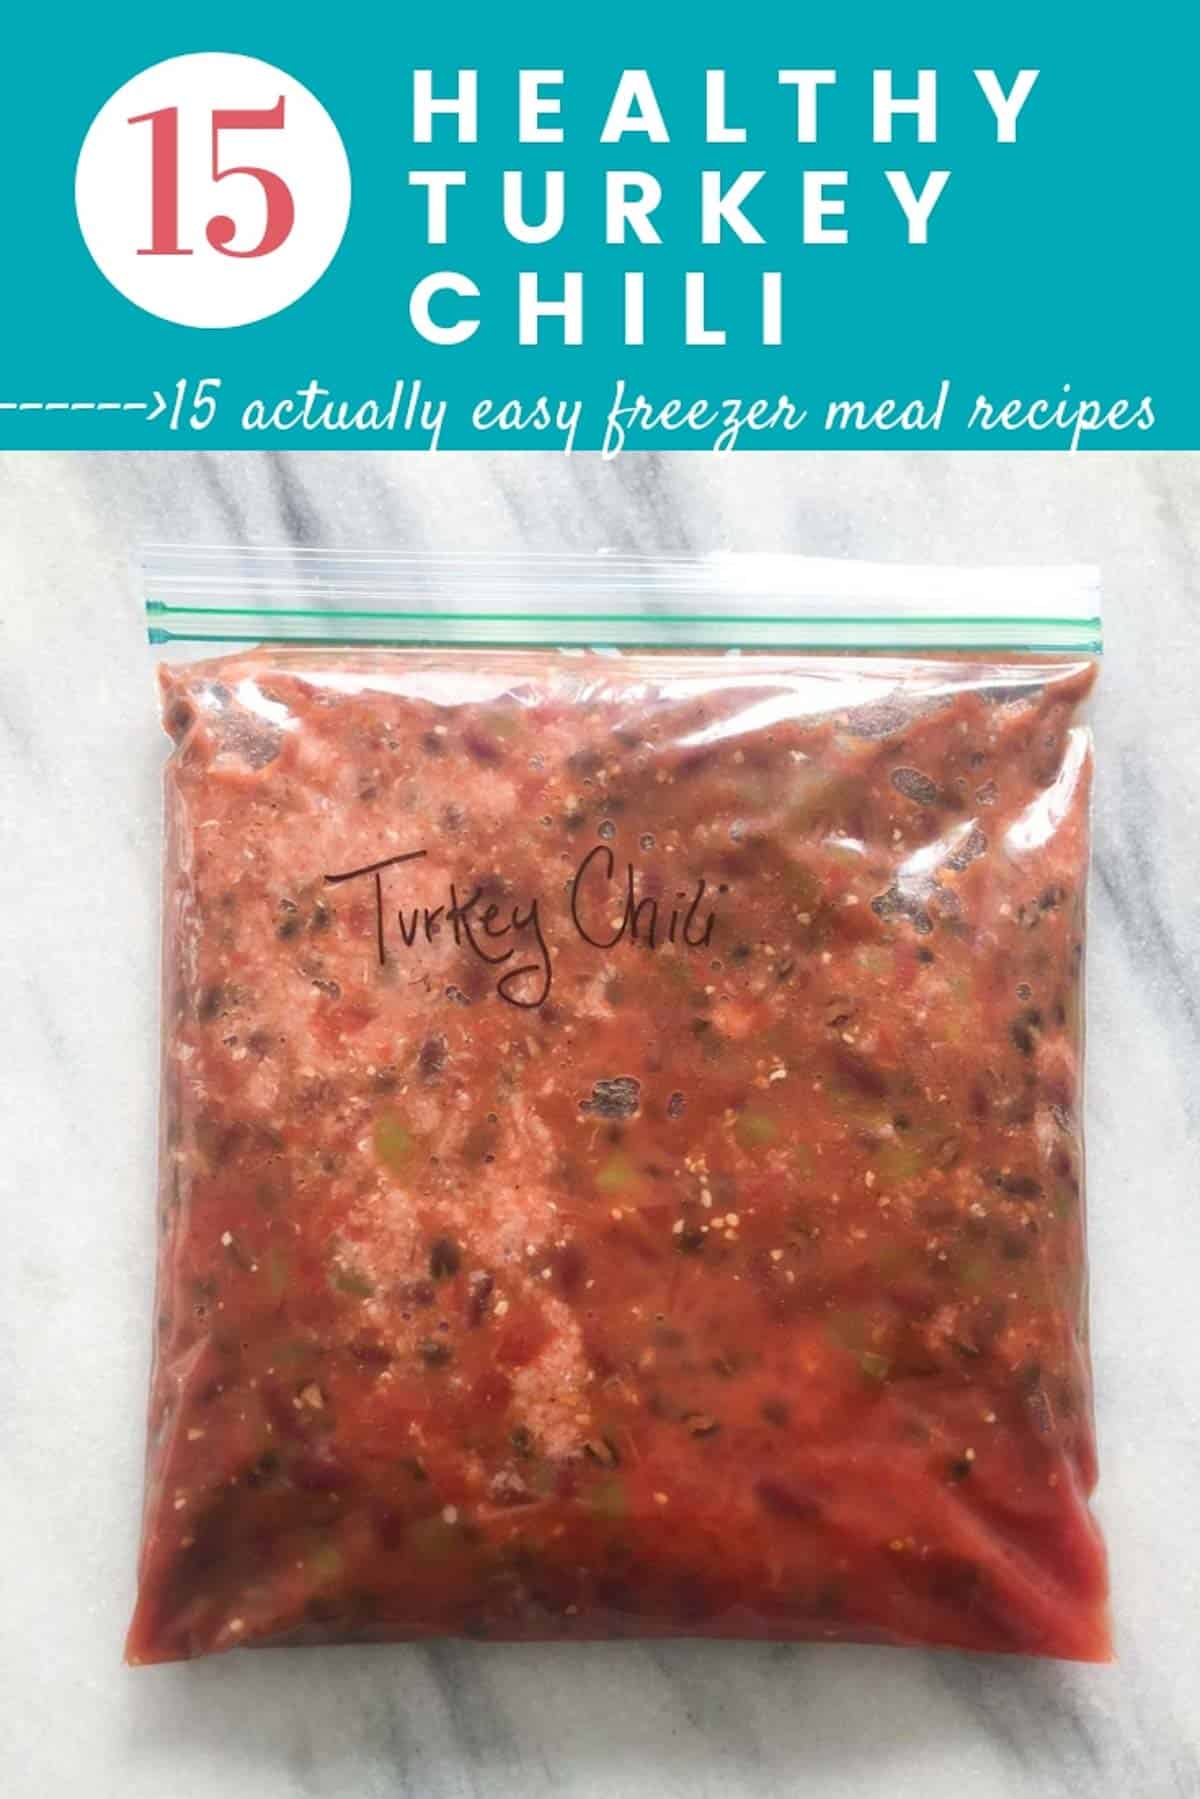 15 Easy freezer meals - Healthy Turkey Chili recipe in a freezer bag